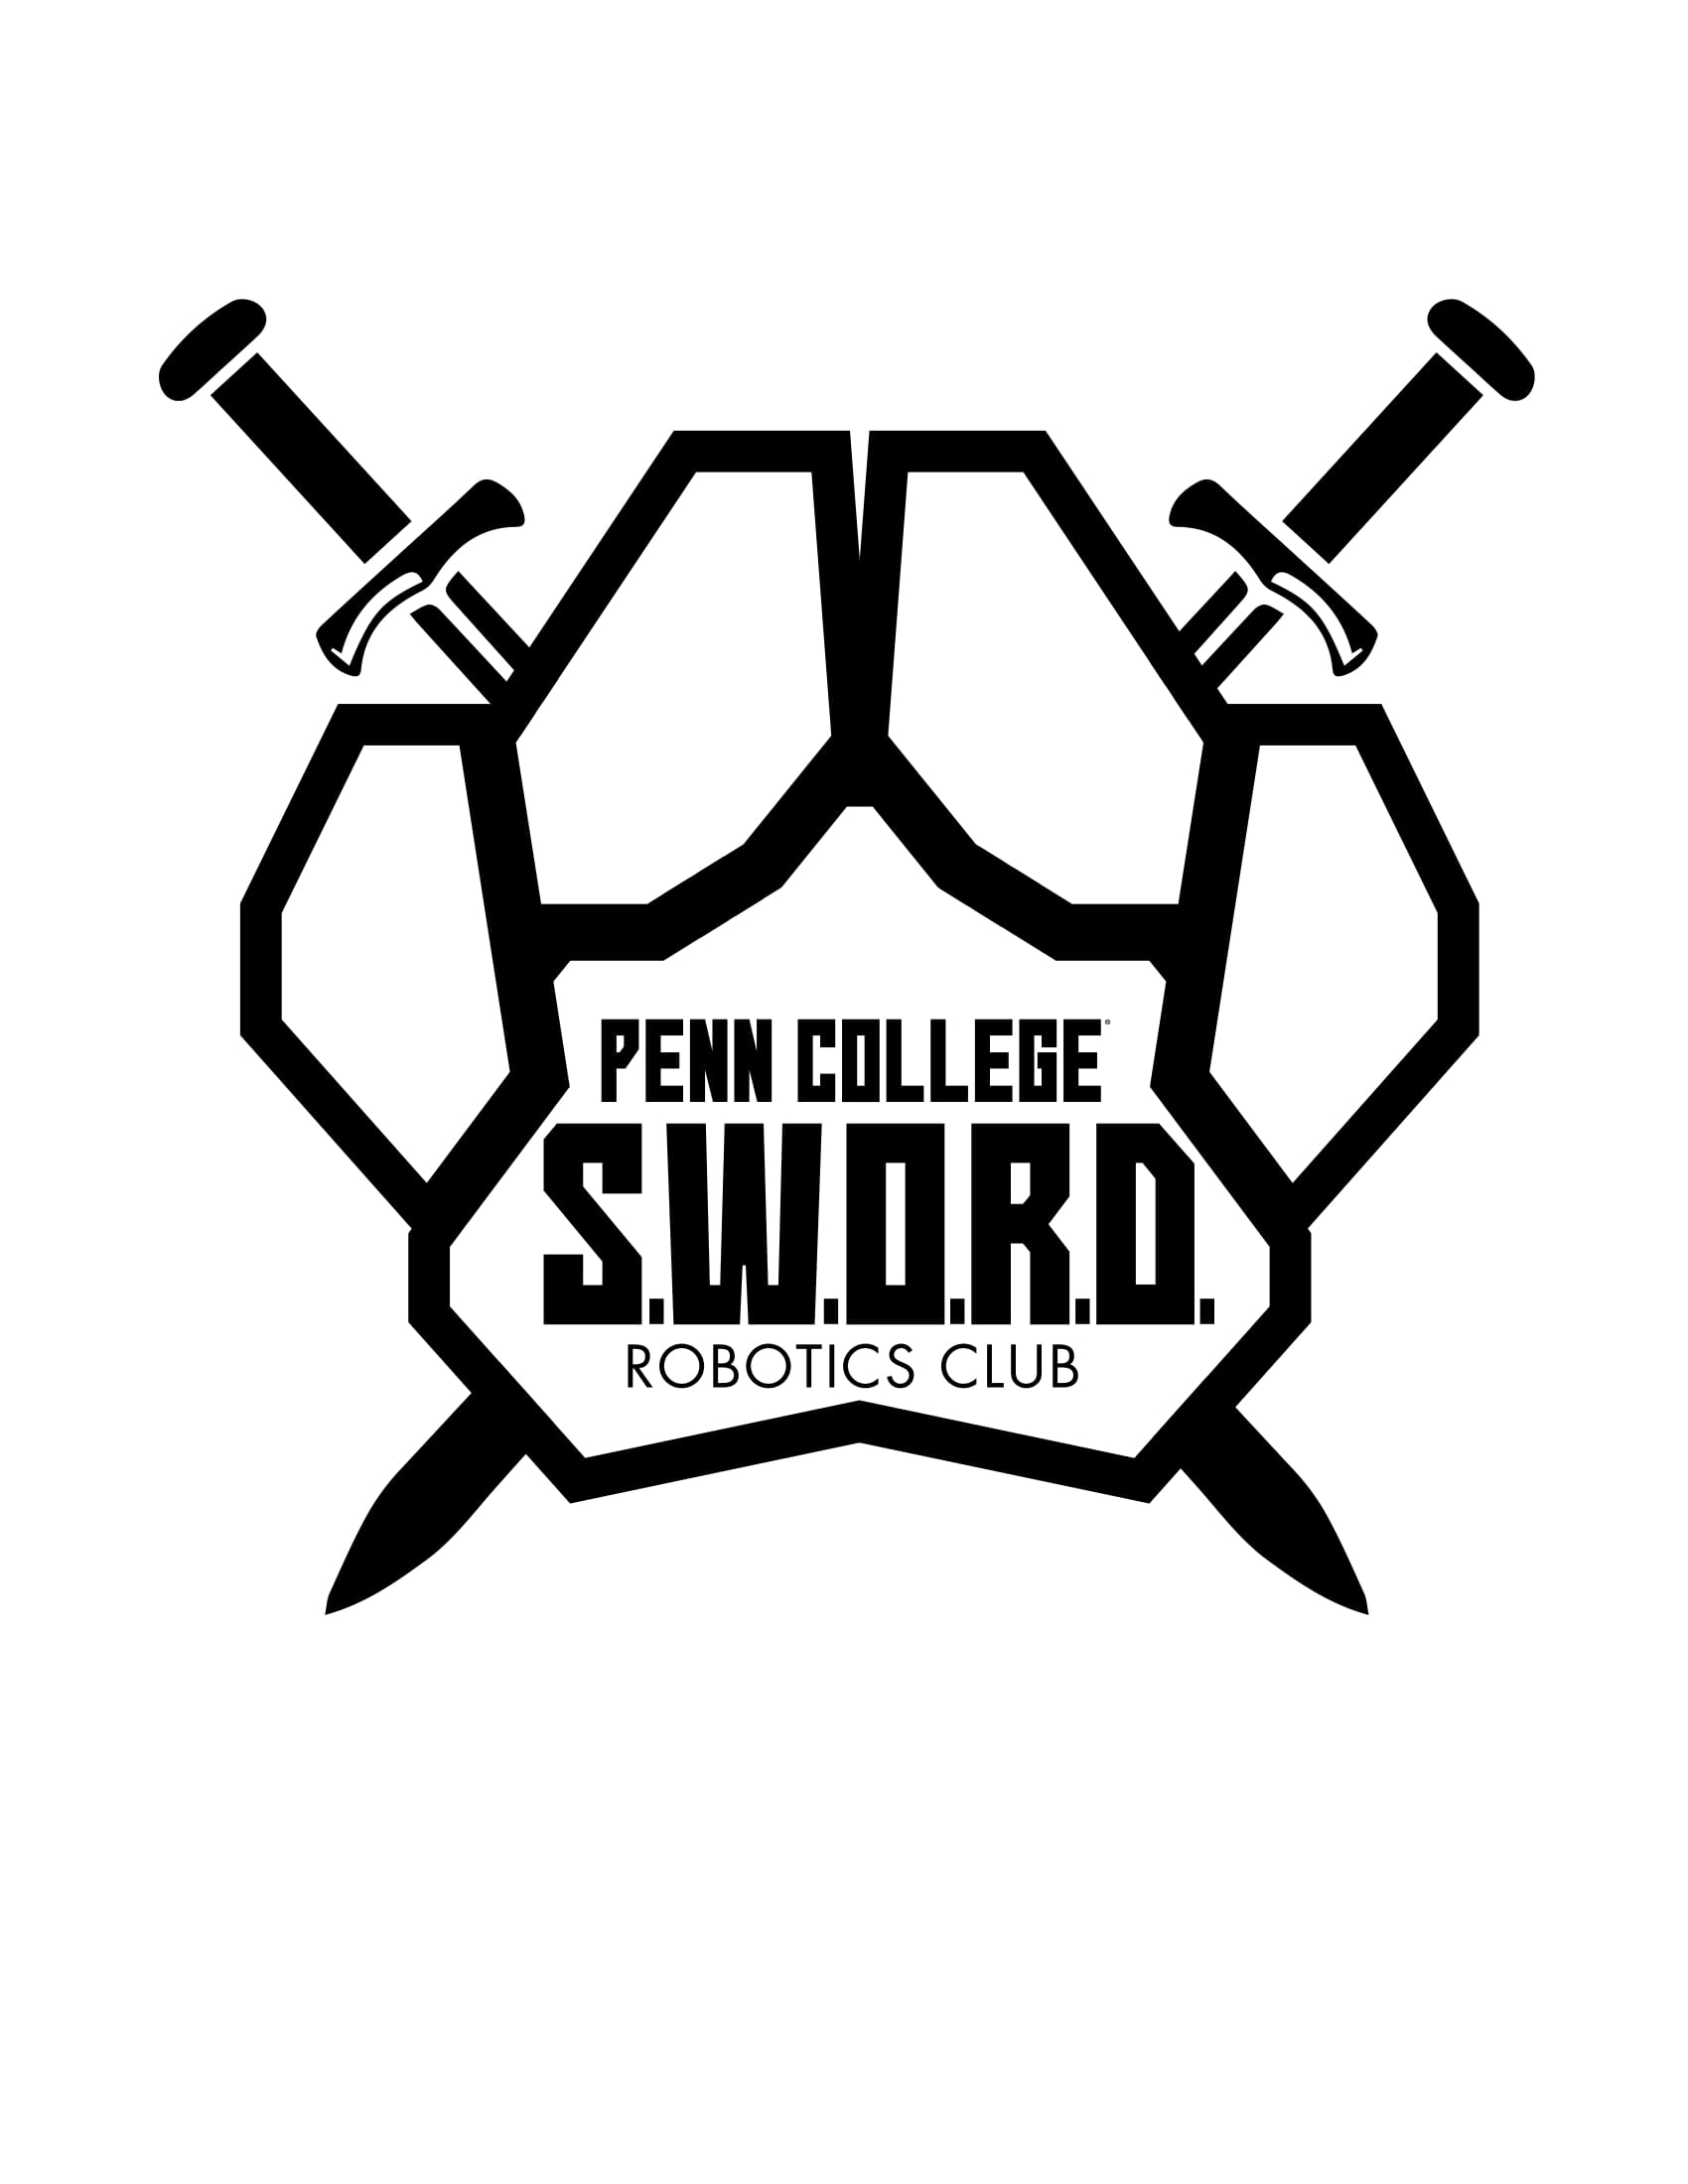 Penn College S.W.O.R.D